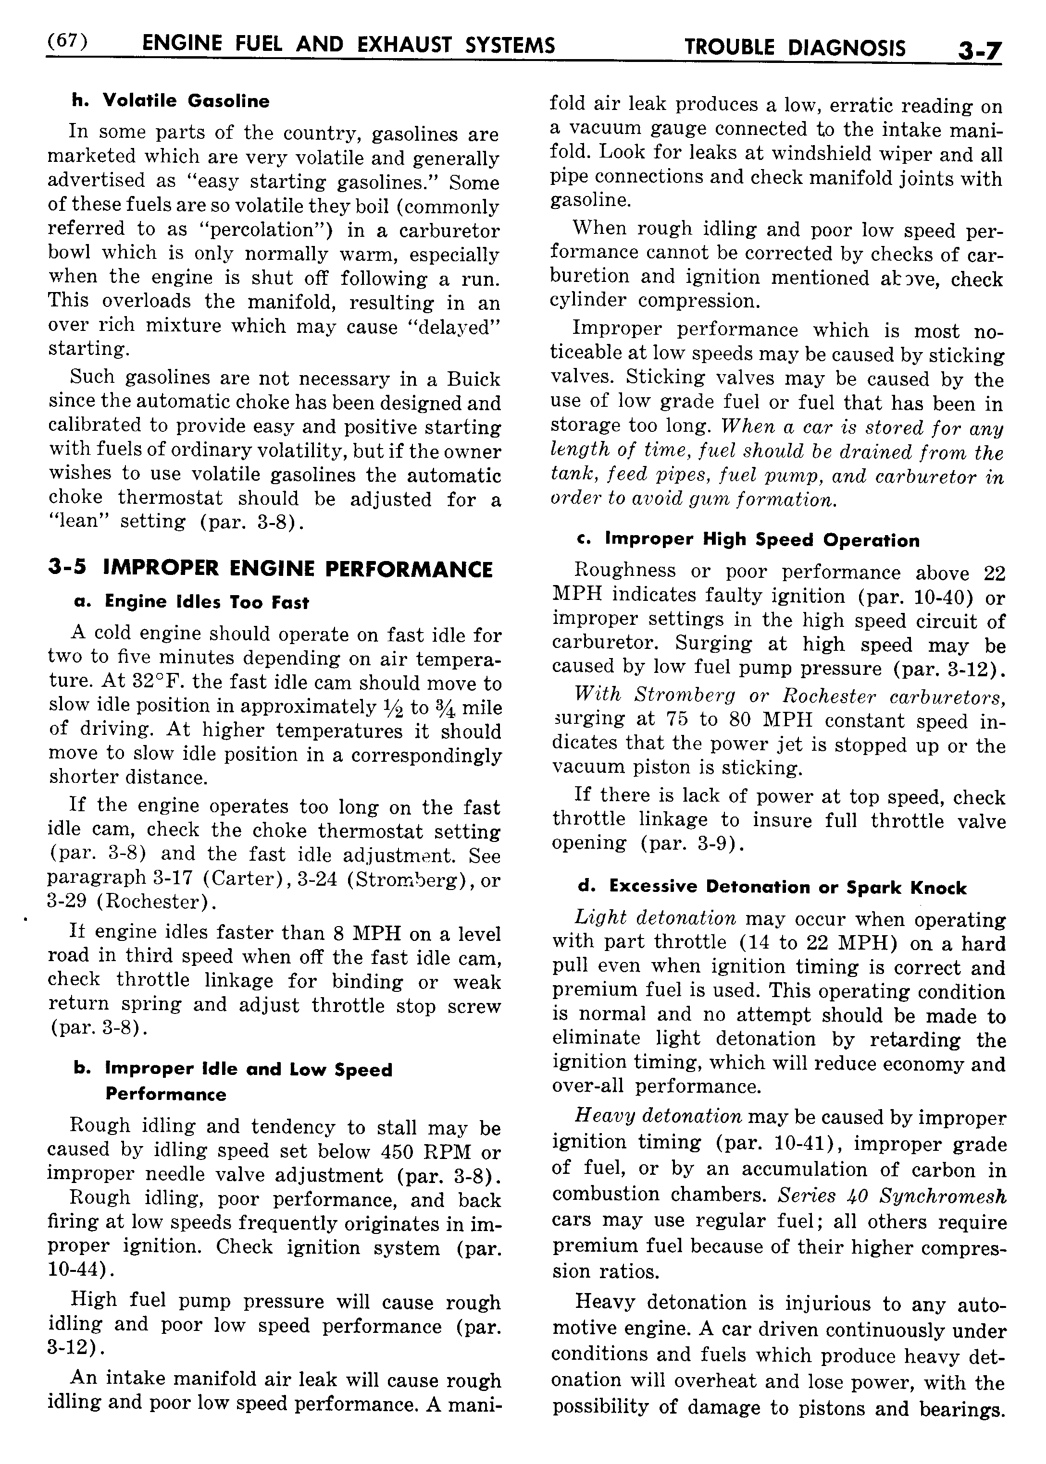 n_04 1956 Buick Shop Manual - Engine Fuel & Exhaust-007-007.jpg